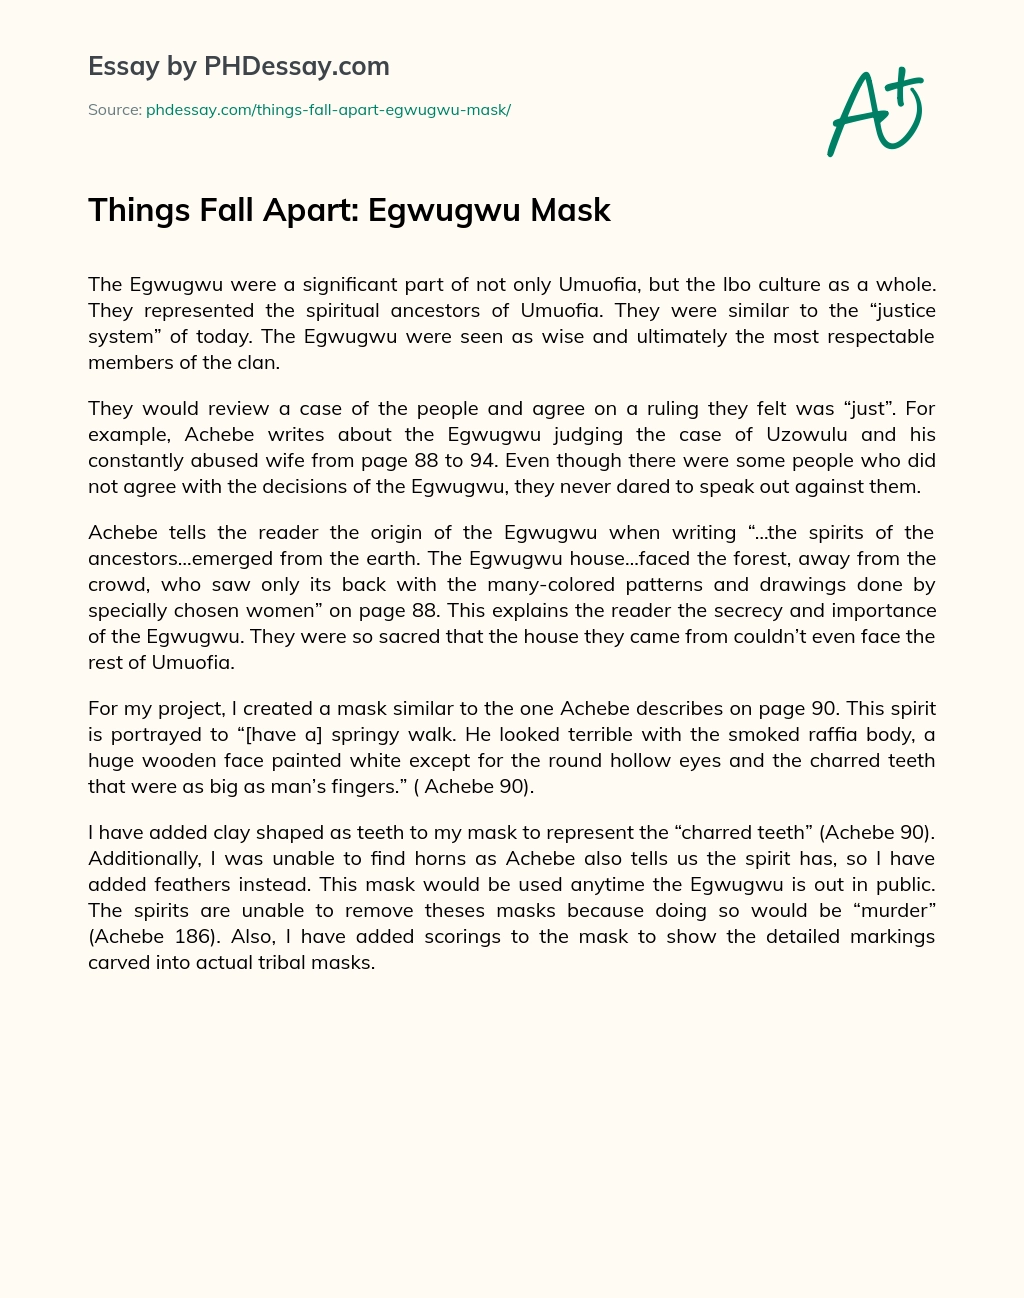 Things Fall Apart: Egwugwu Mask essay